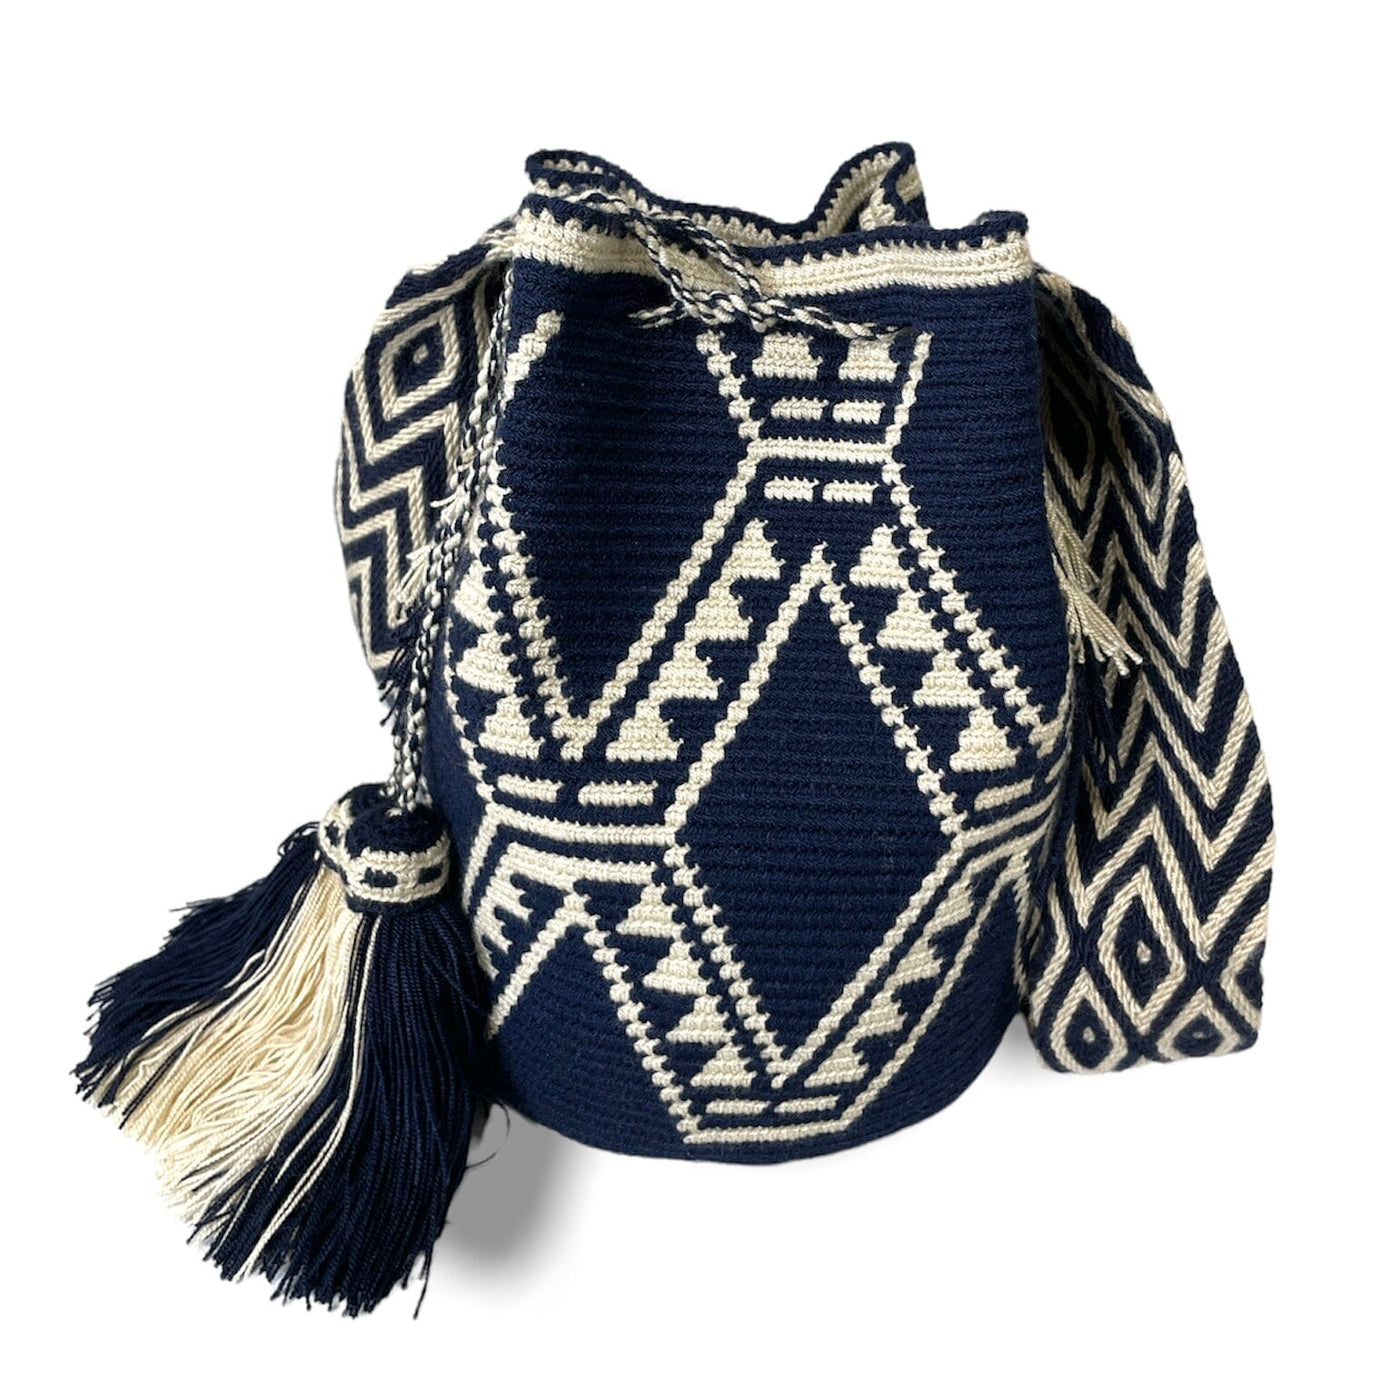 Blue Crochet Bags | Crossbody bohemian handbags| Boho purse for women ...